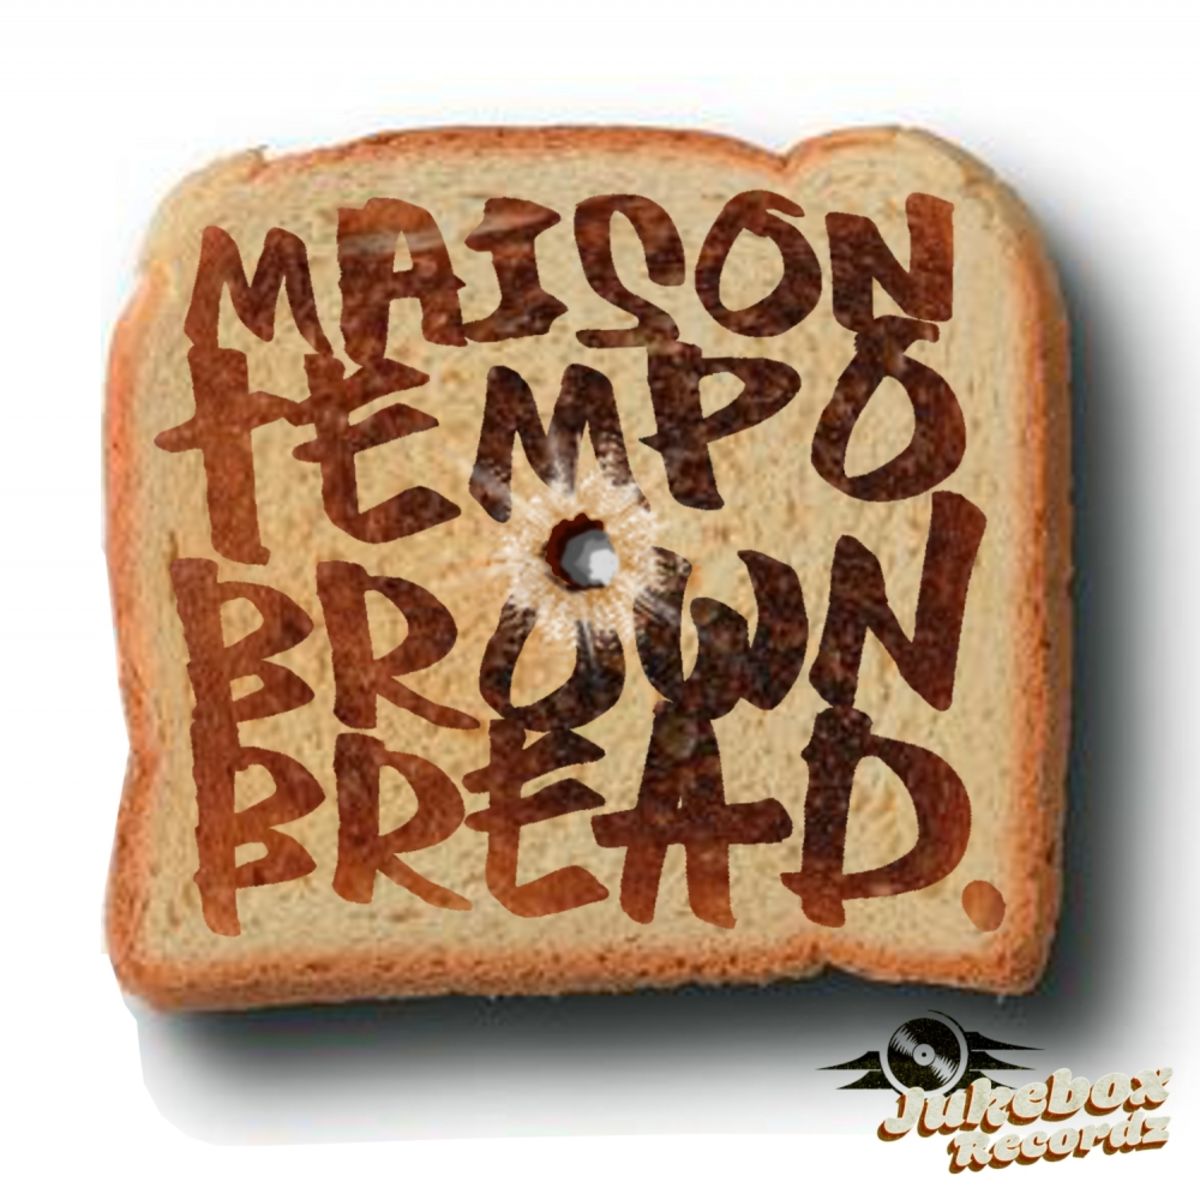 Maison Tempo - Brown Bread / Jukebox Recordz